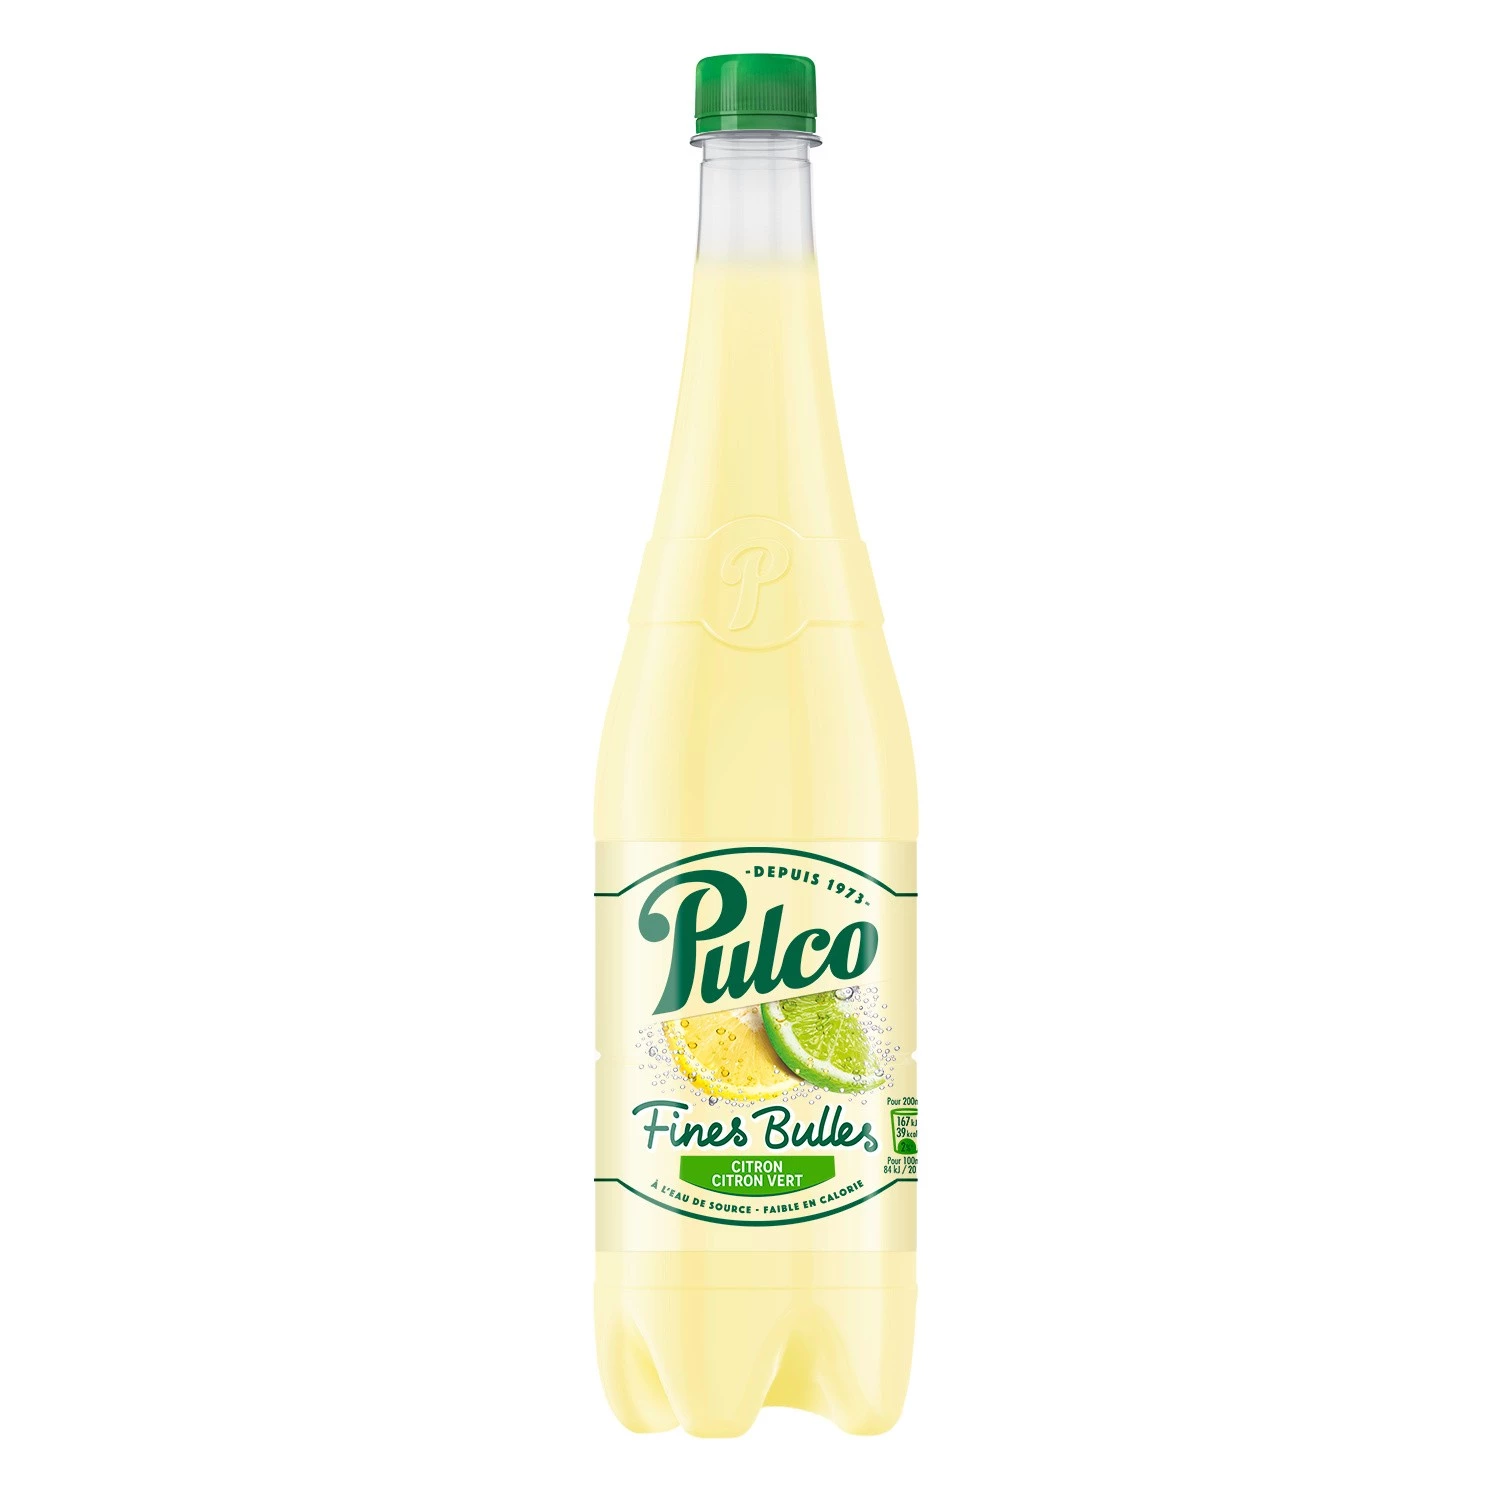 Soda citron/citron vert 1L - PULCO